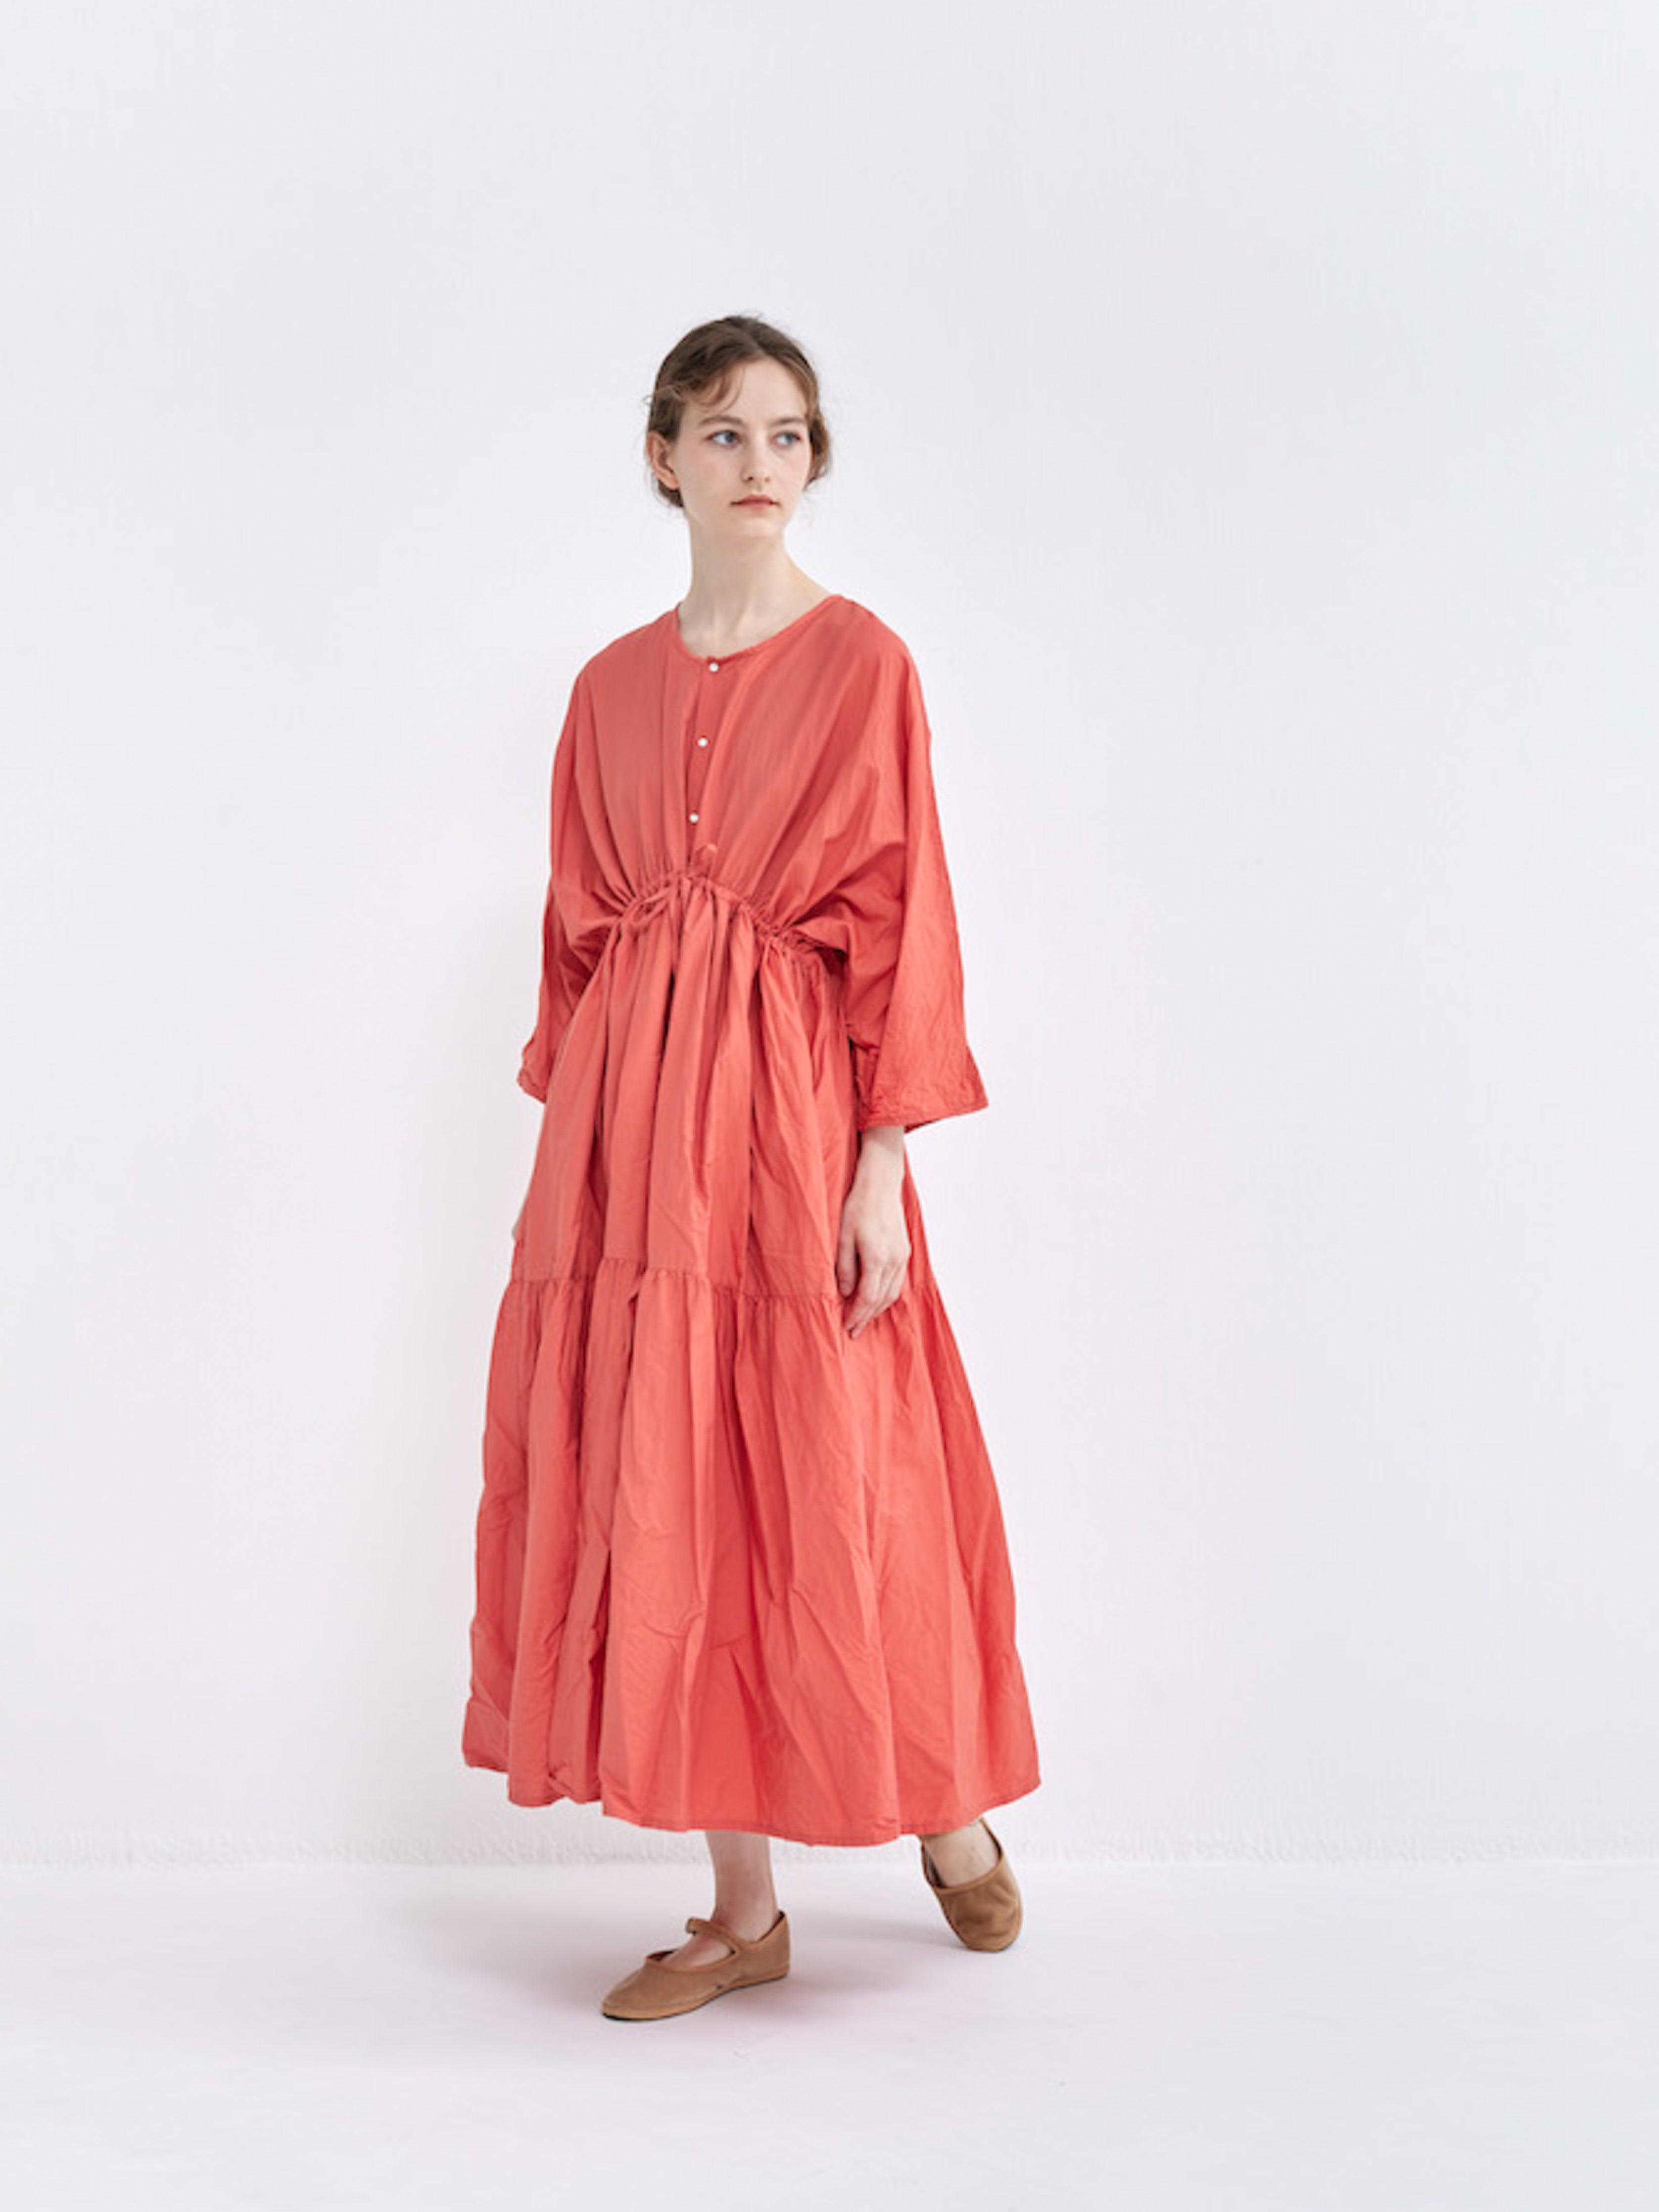 Namu Shop - Veritecoeur Co / Silk Two Way Dress - Orange Red